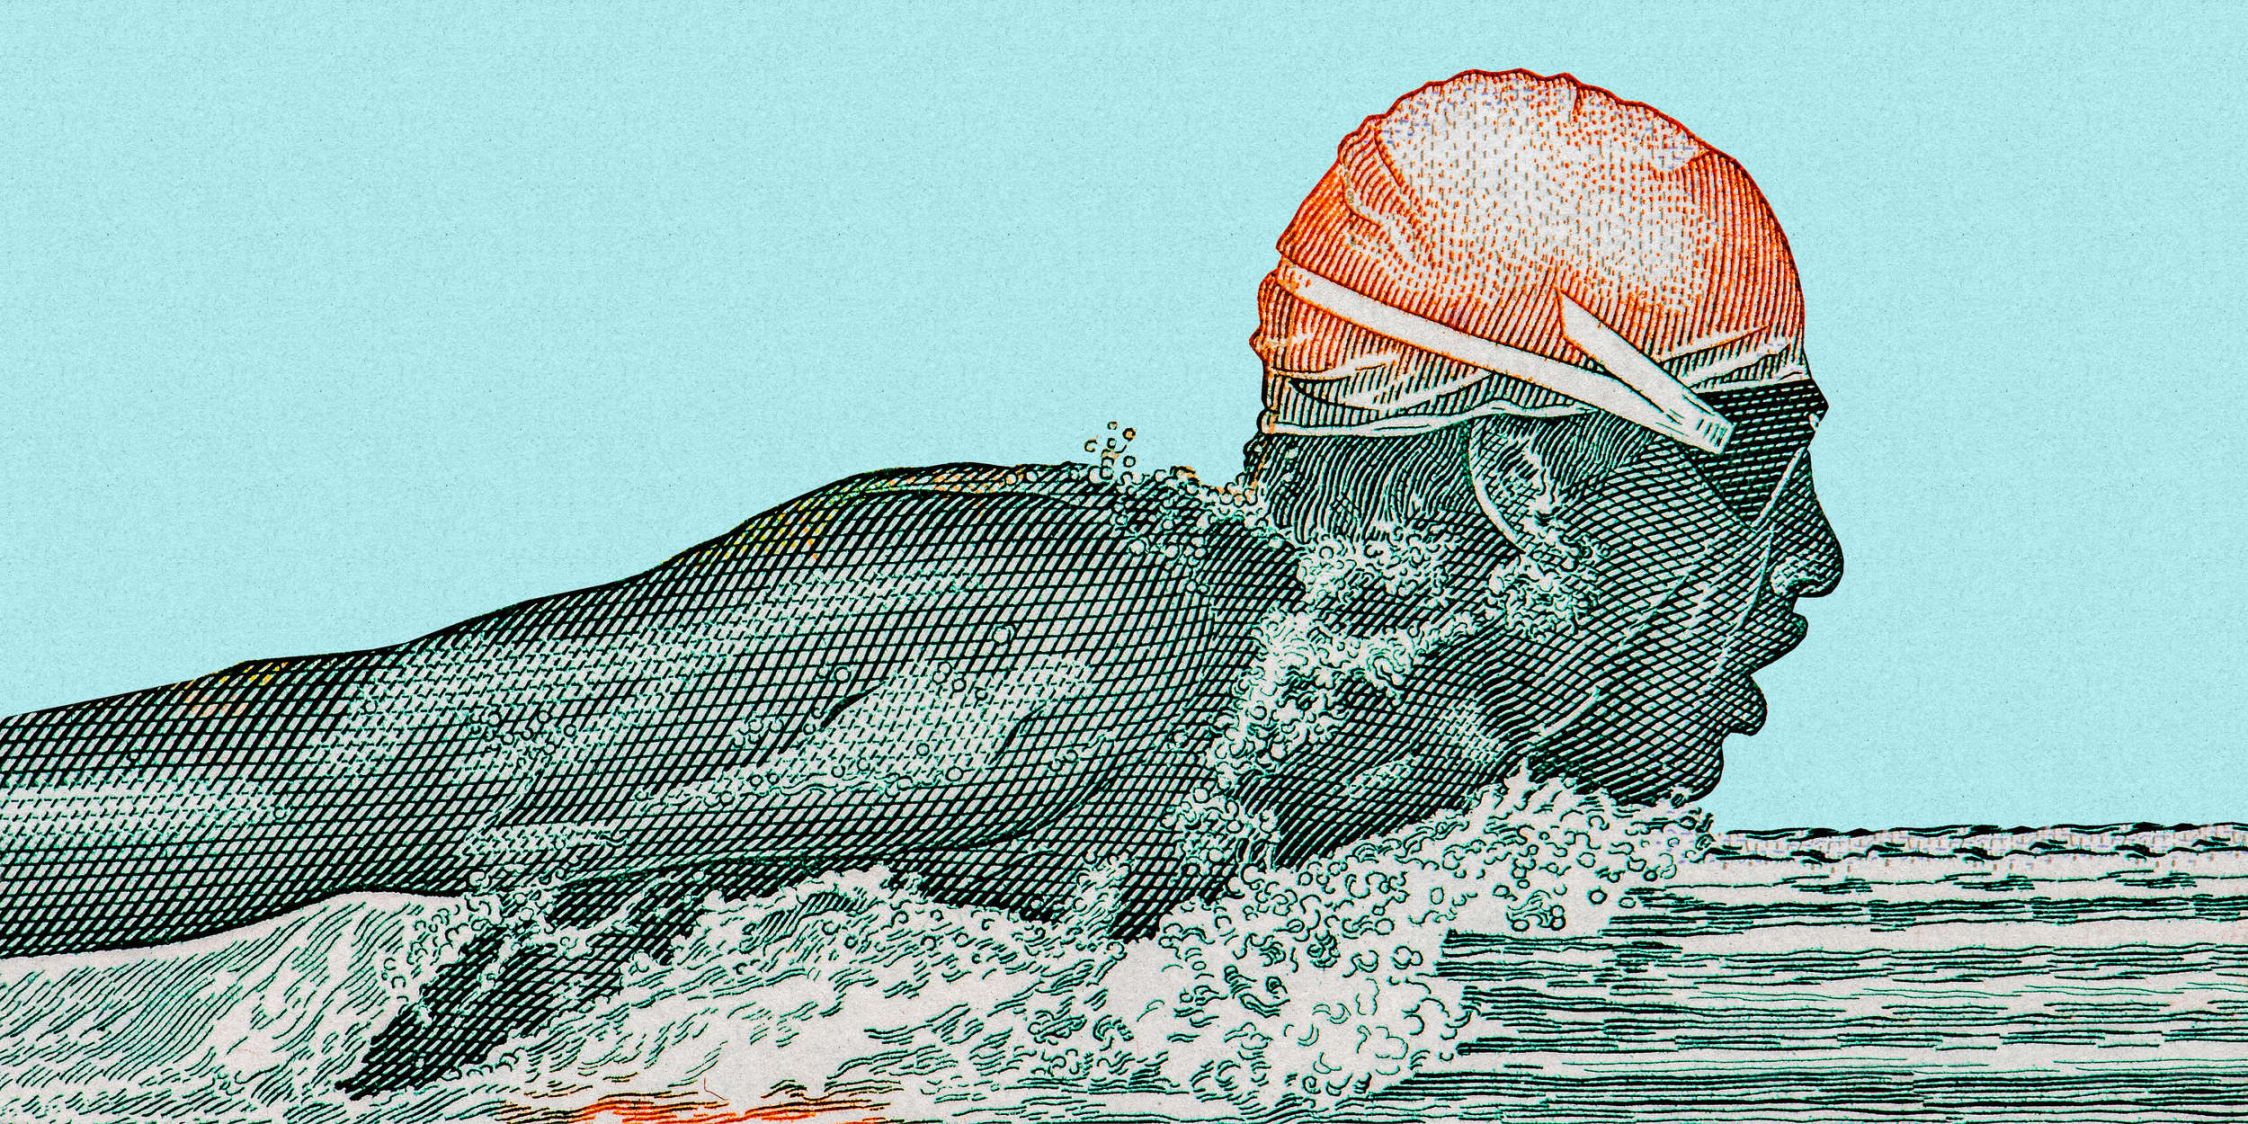             Fotomurali »aquaman« - nuotatore in pixel - benzina con texture carta kraft | Materiali non tessuto liscio, leggermente perlato e scintillante
        